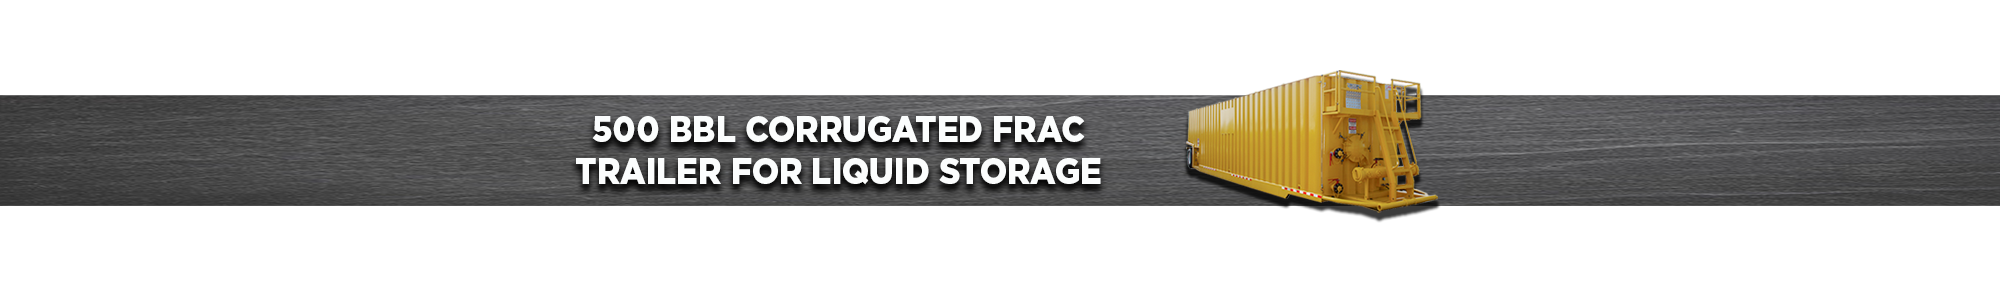 500 BBL Corrugated Frac Trailer for Liquid Storage (1)